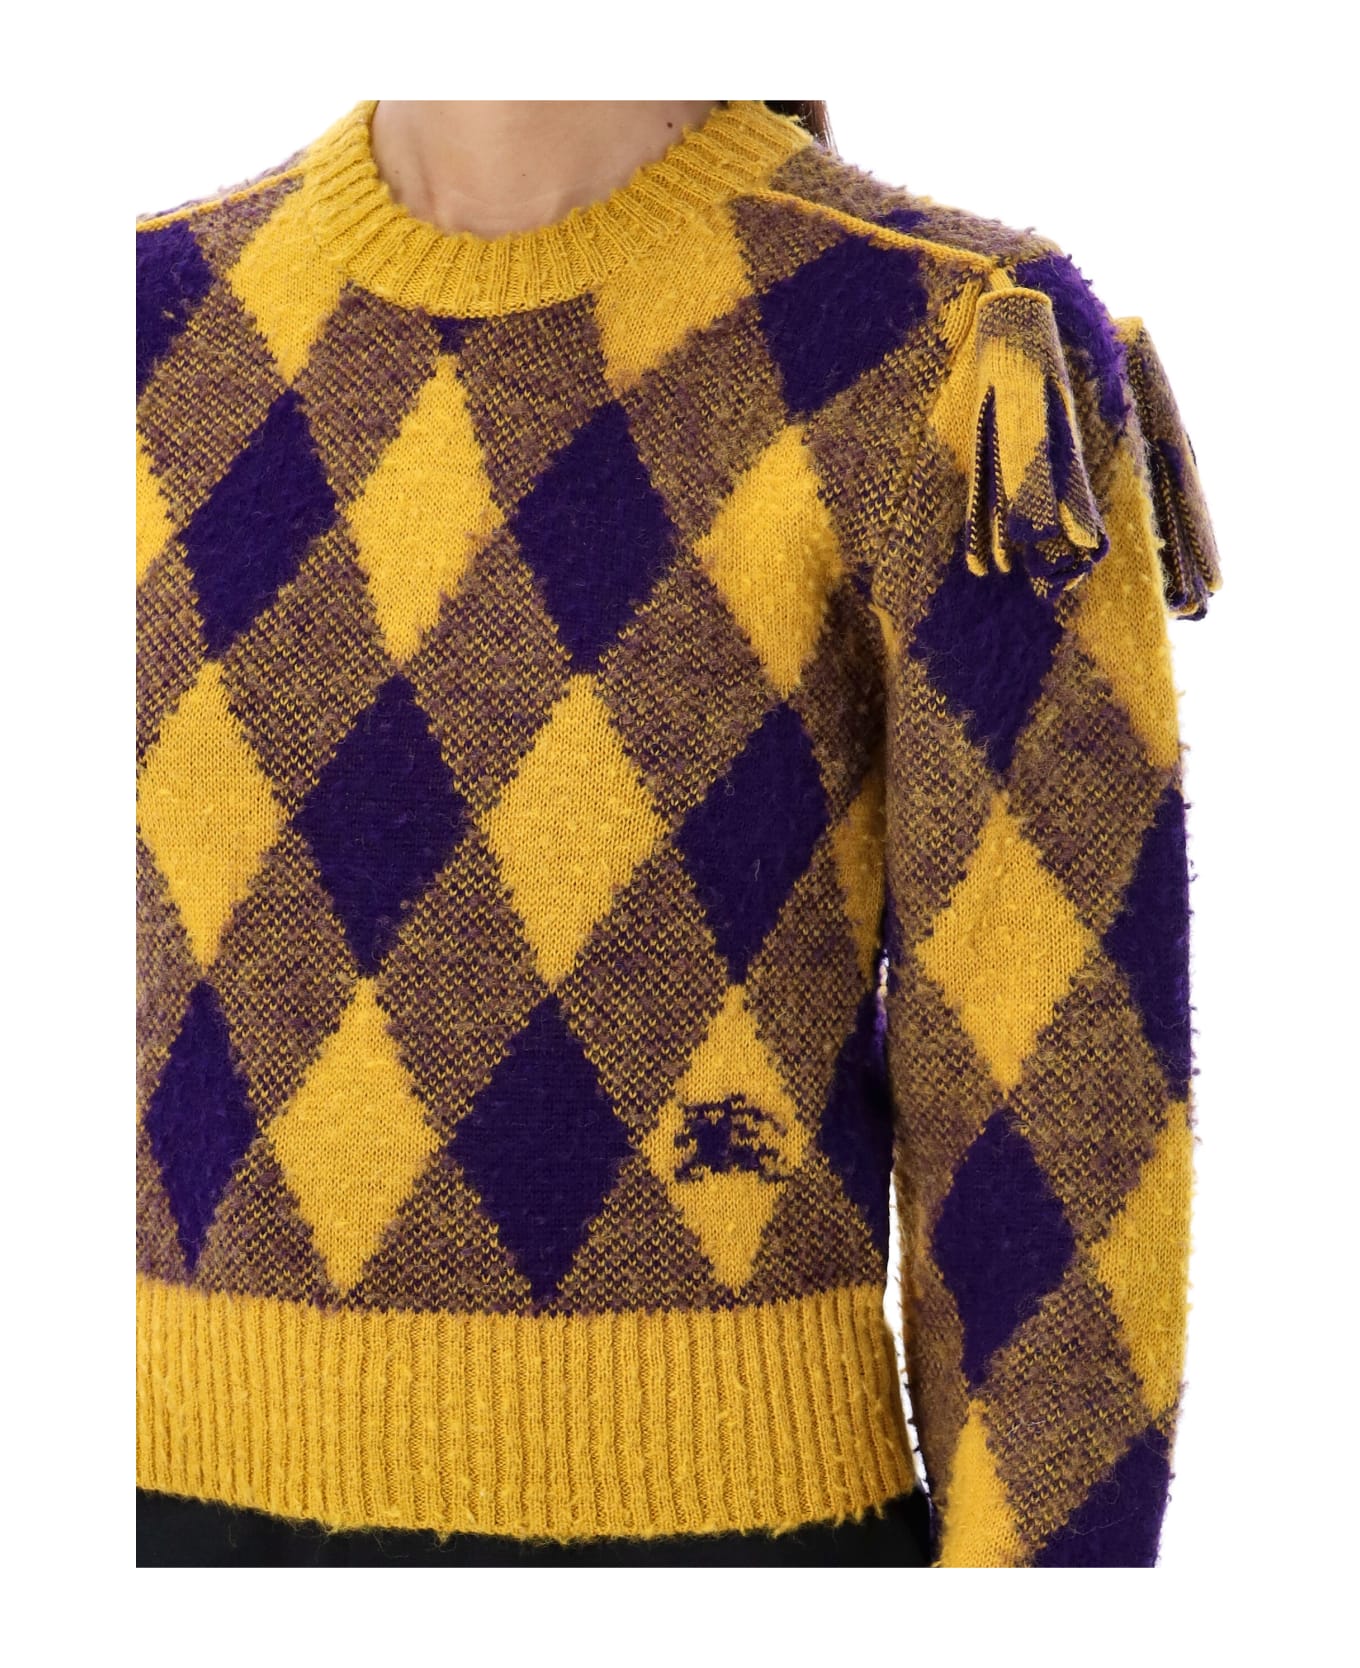 Burberry London Argyle Wool Sweater - YELLOW PURPLE ニットウェア